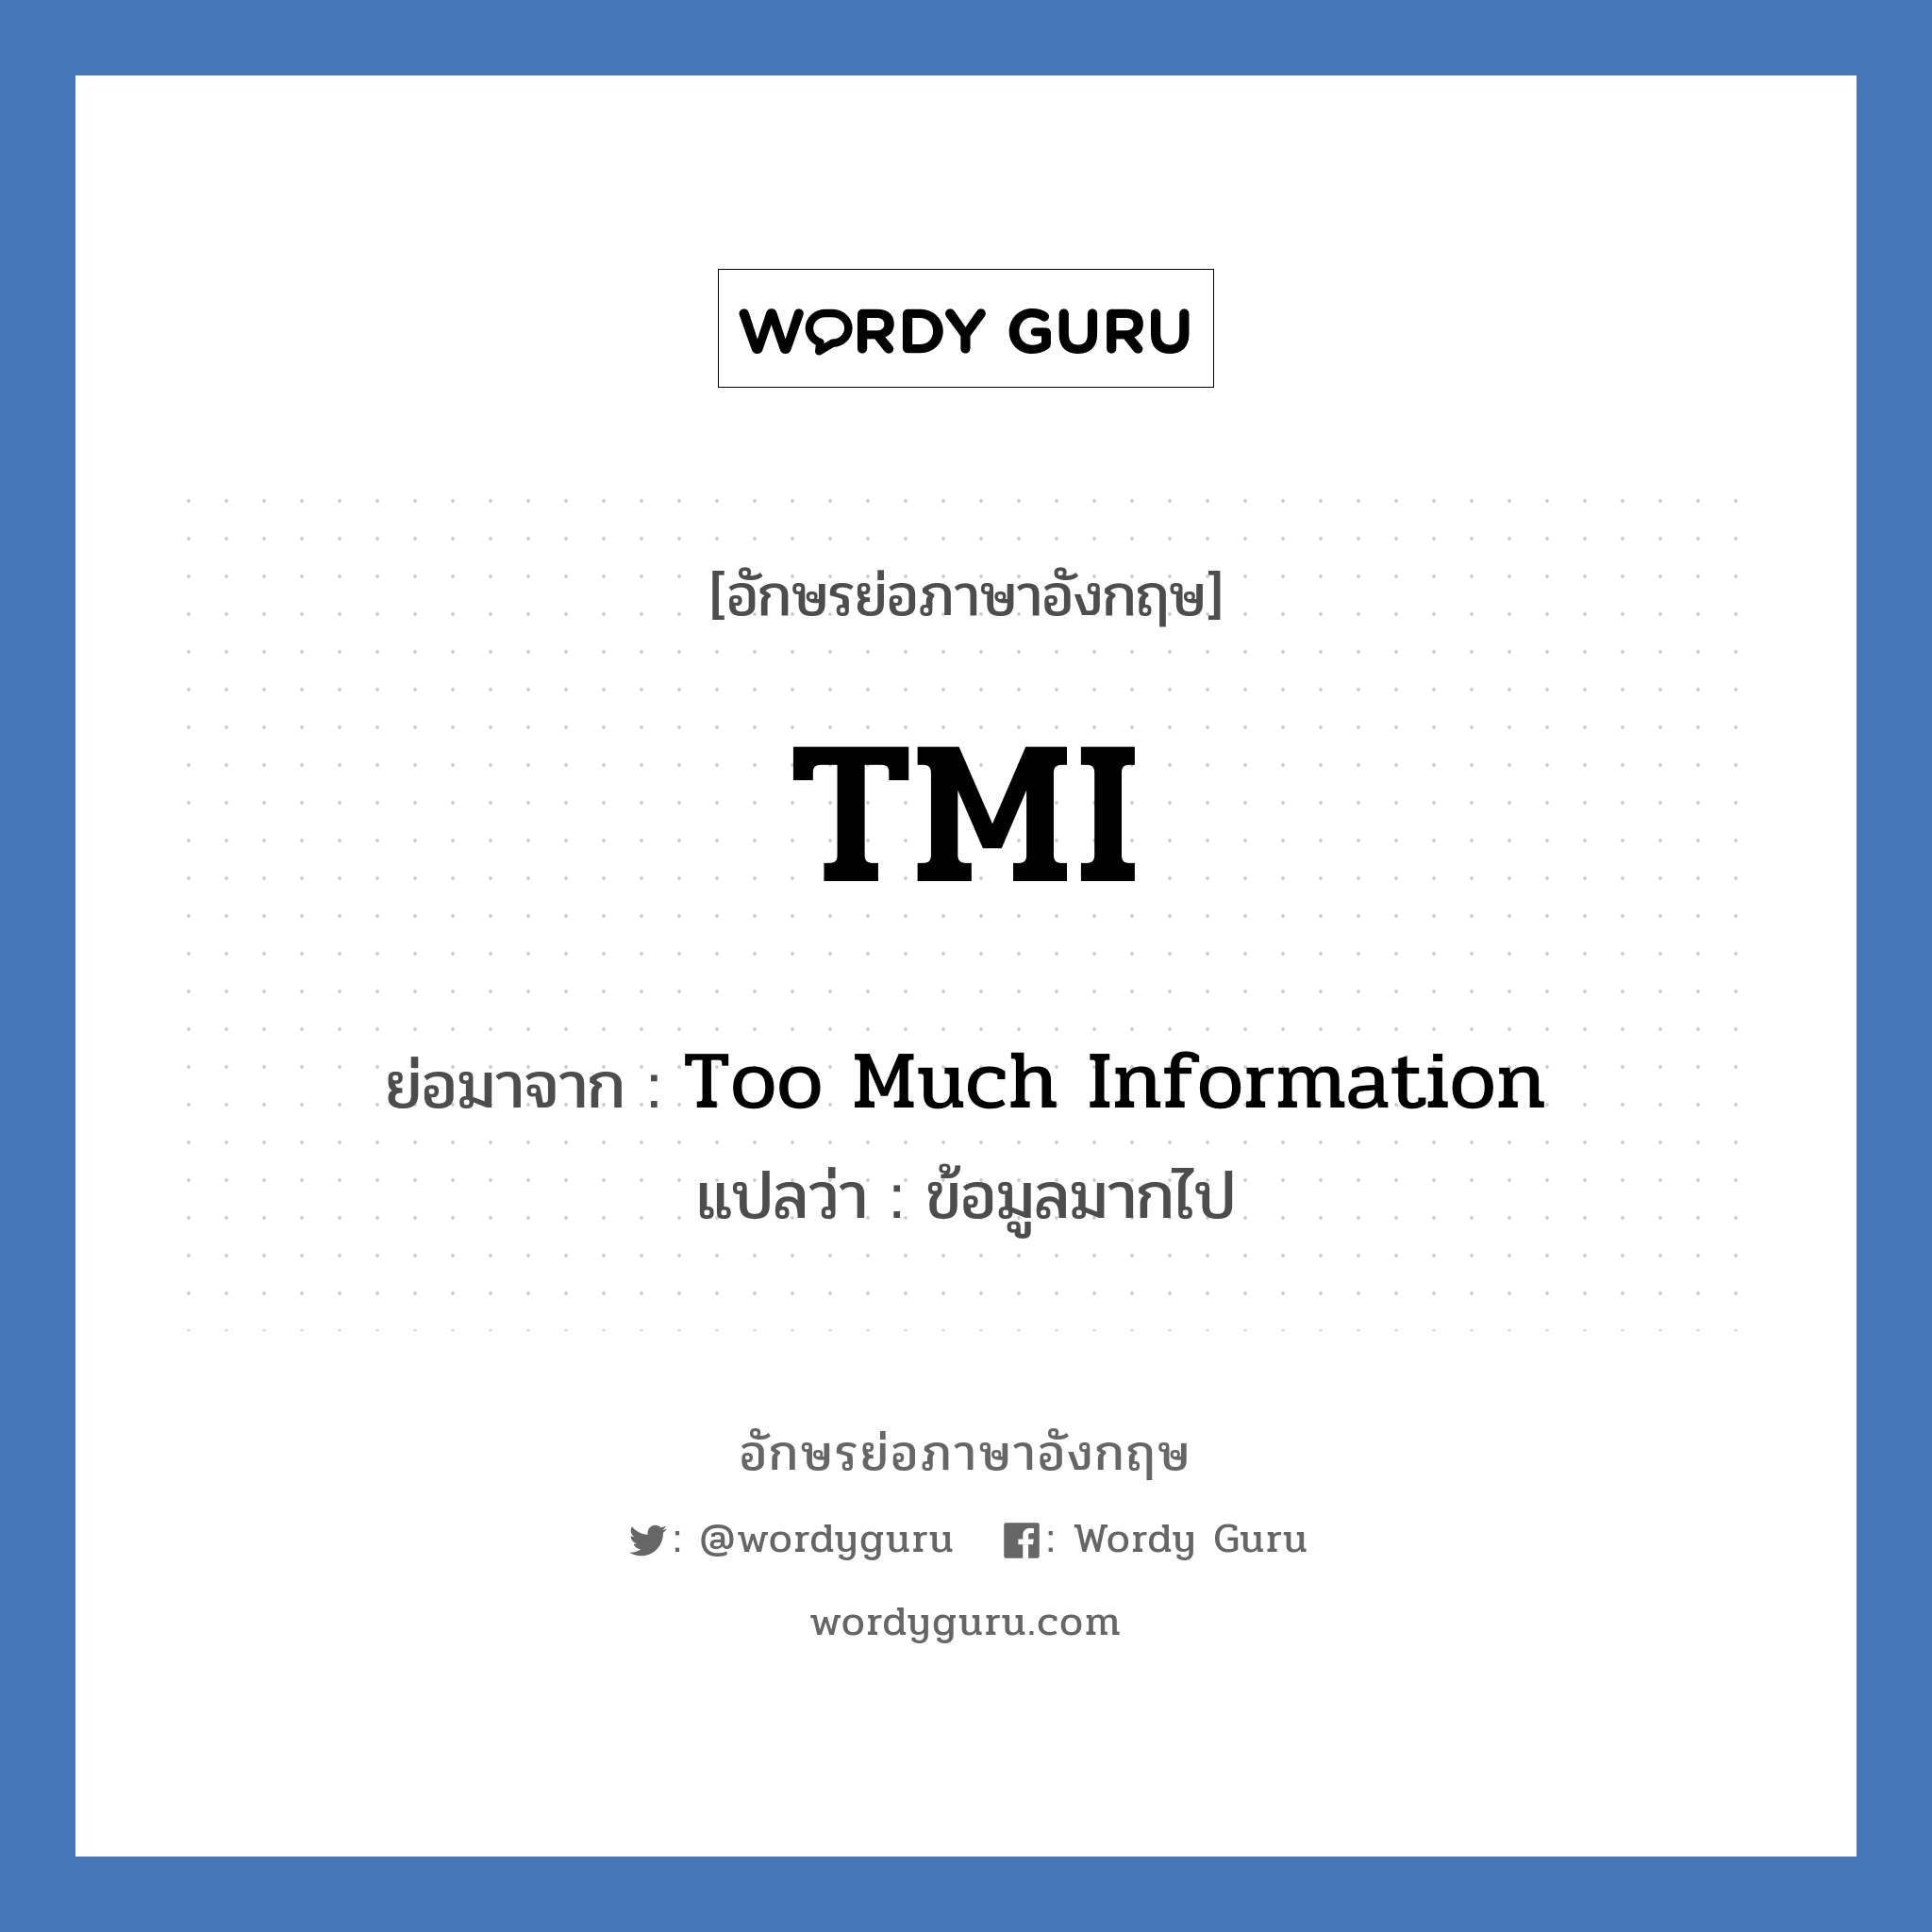 Too Much Information คำย่อคือ? แปลว่า?, อักษรย่อภาษาอังกฤษ Too Much Information ย่อมาจาก TMI แปลว่า ข้อมูลมากไป